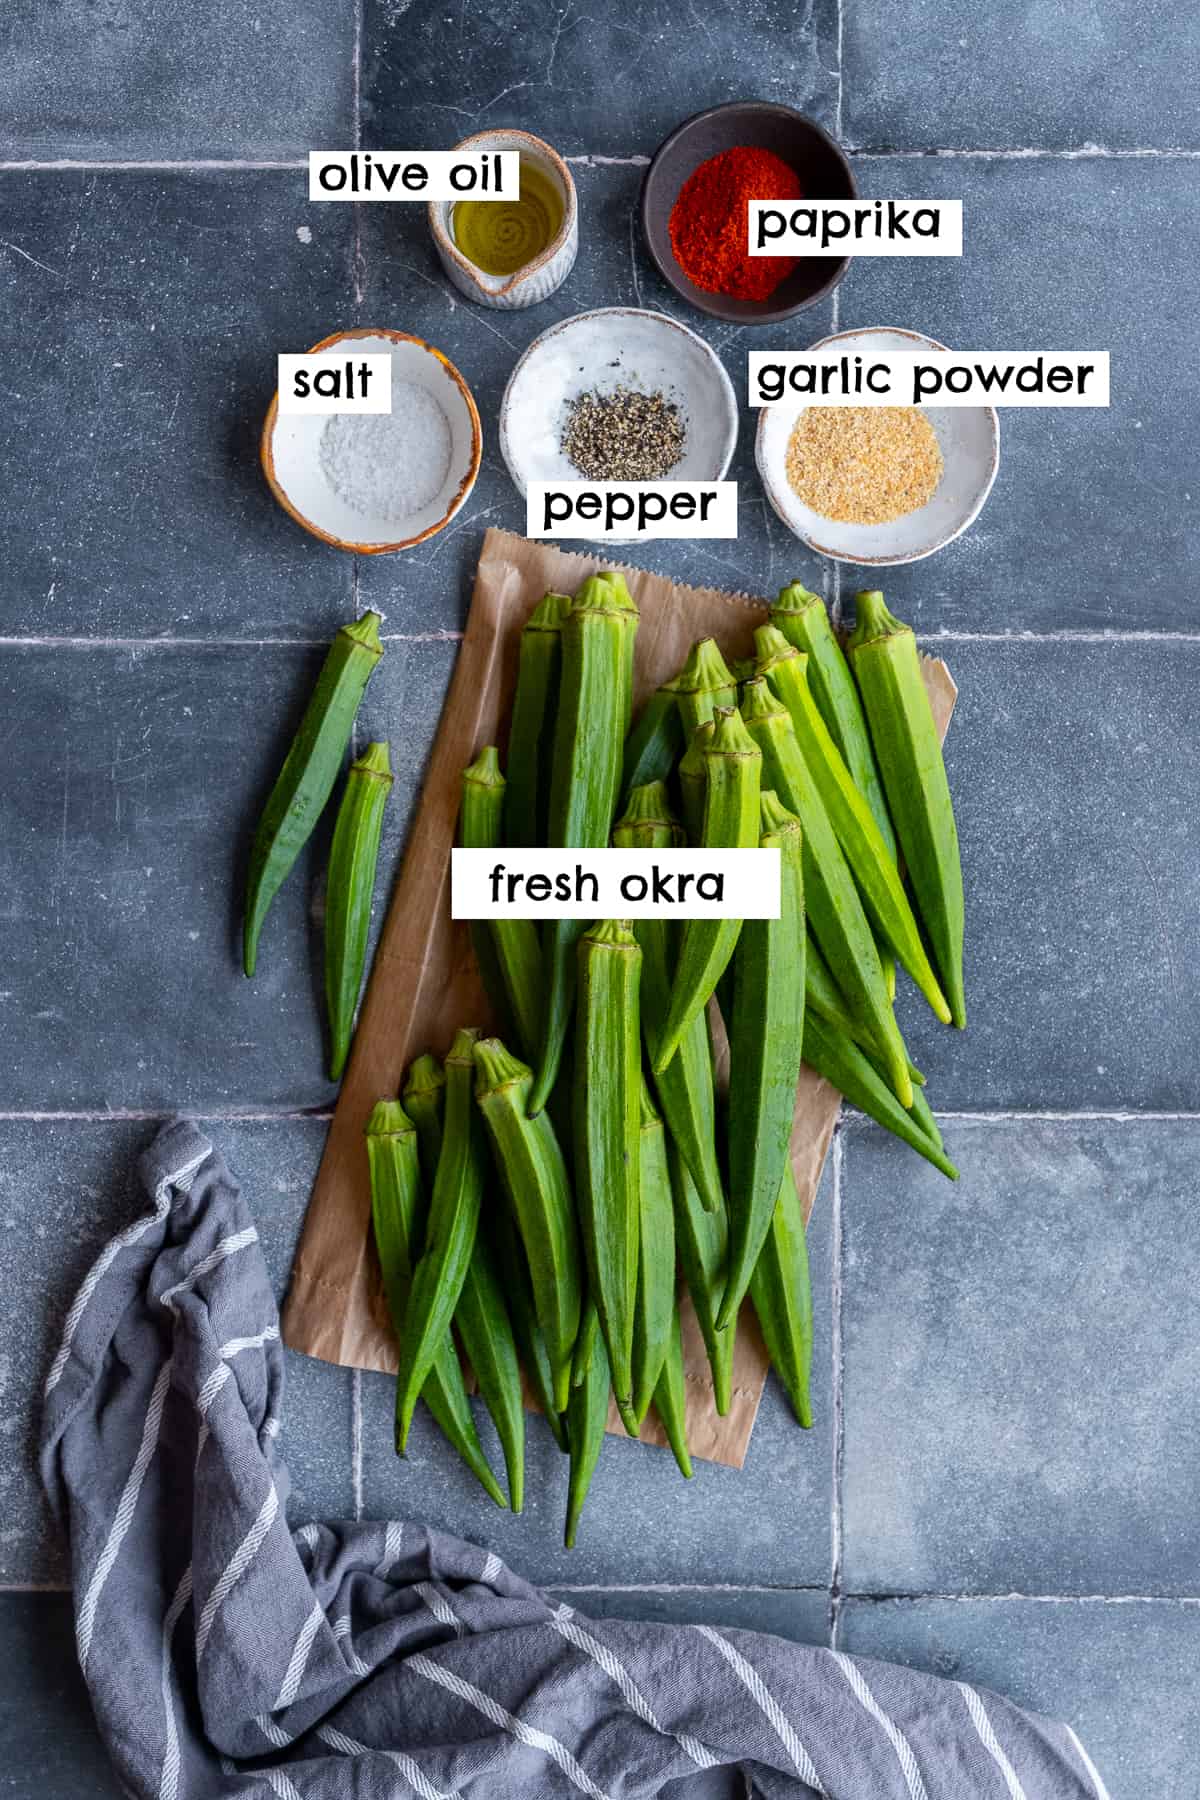 Fresh okra on a piece of brown paper, olive oil, paprika, salt, pepper and garlic powder on grey tiles.